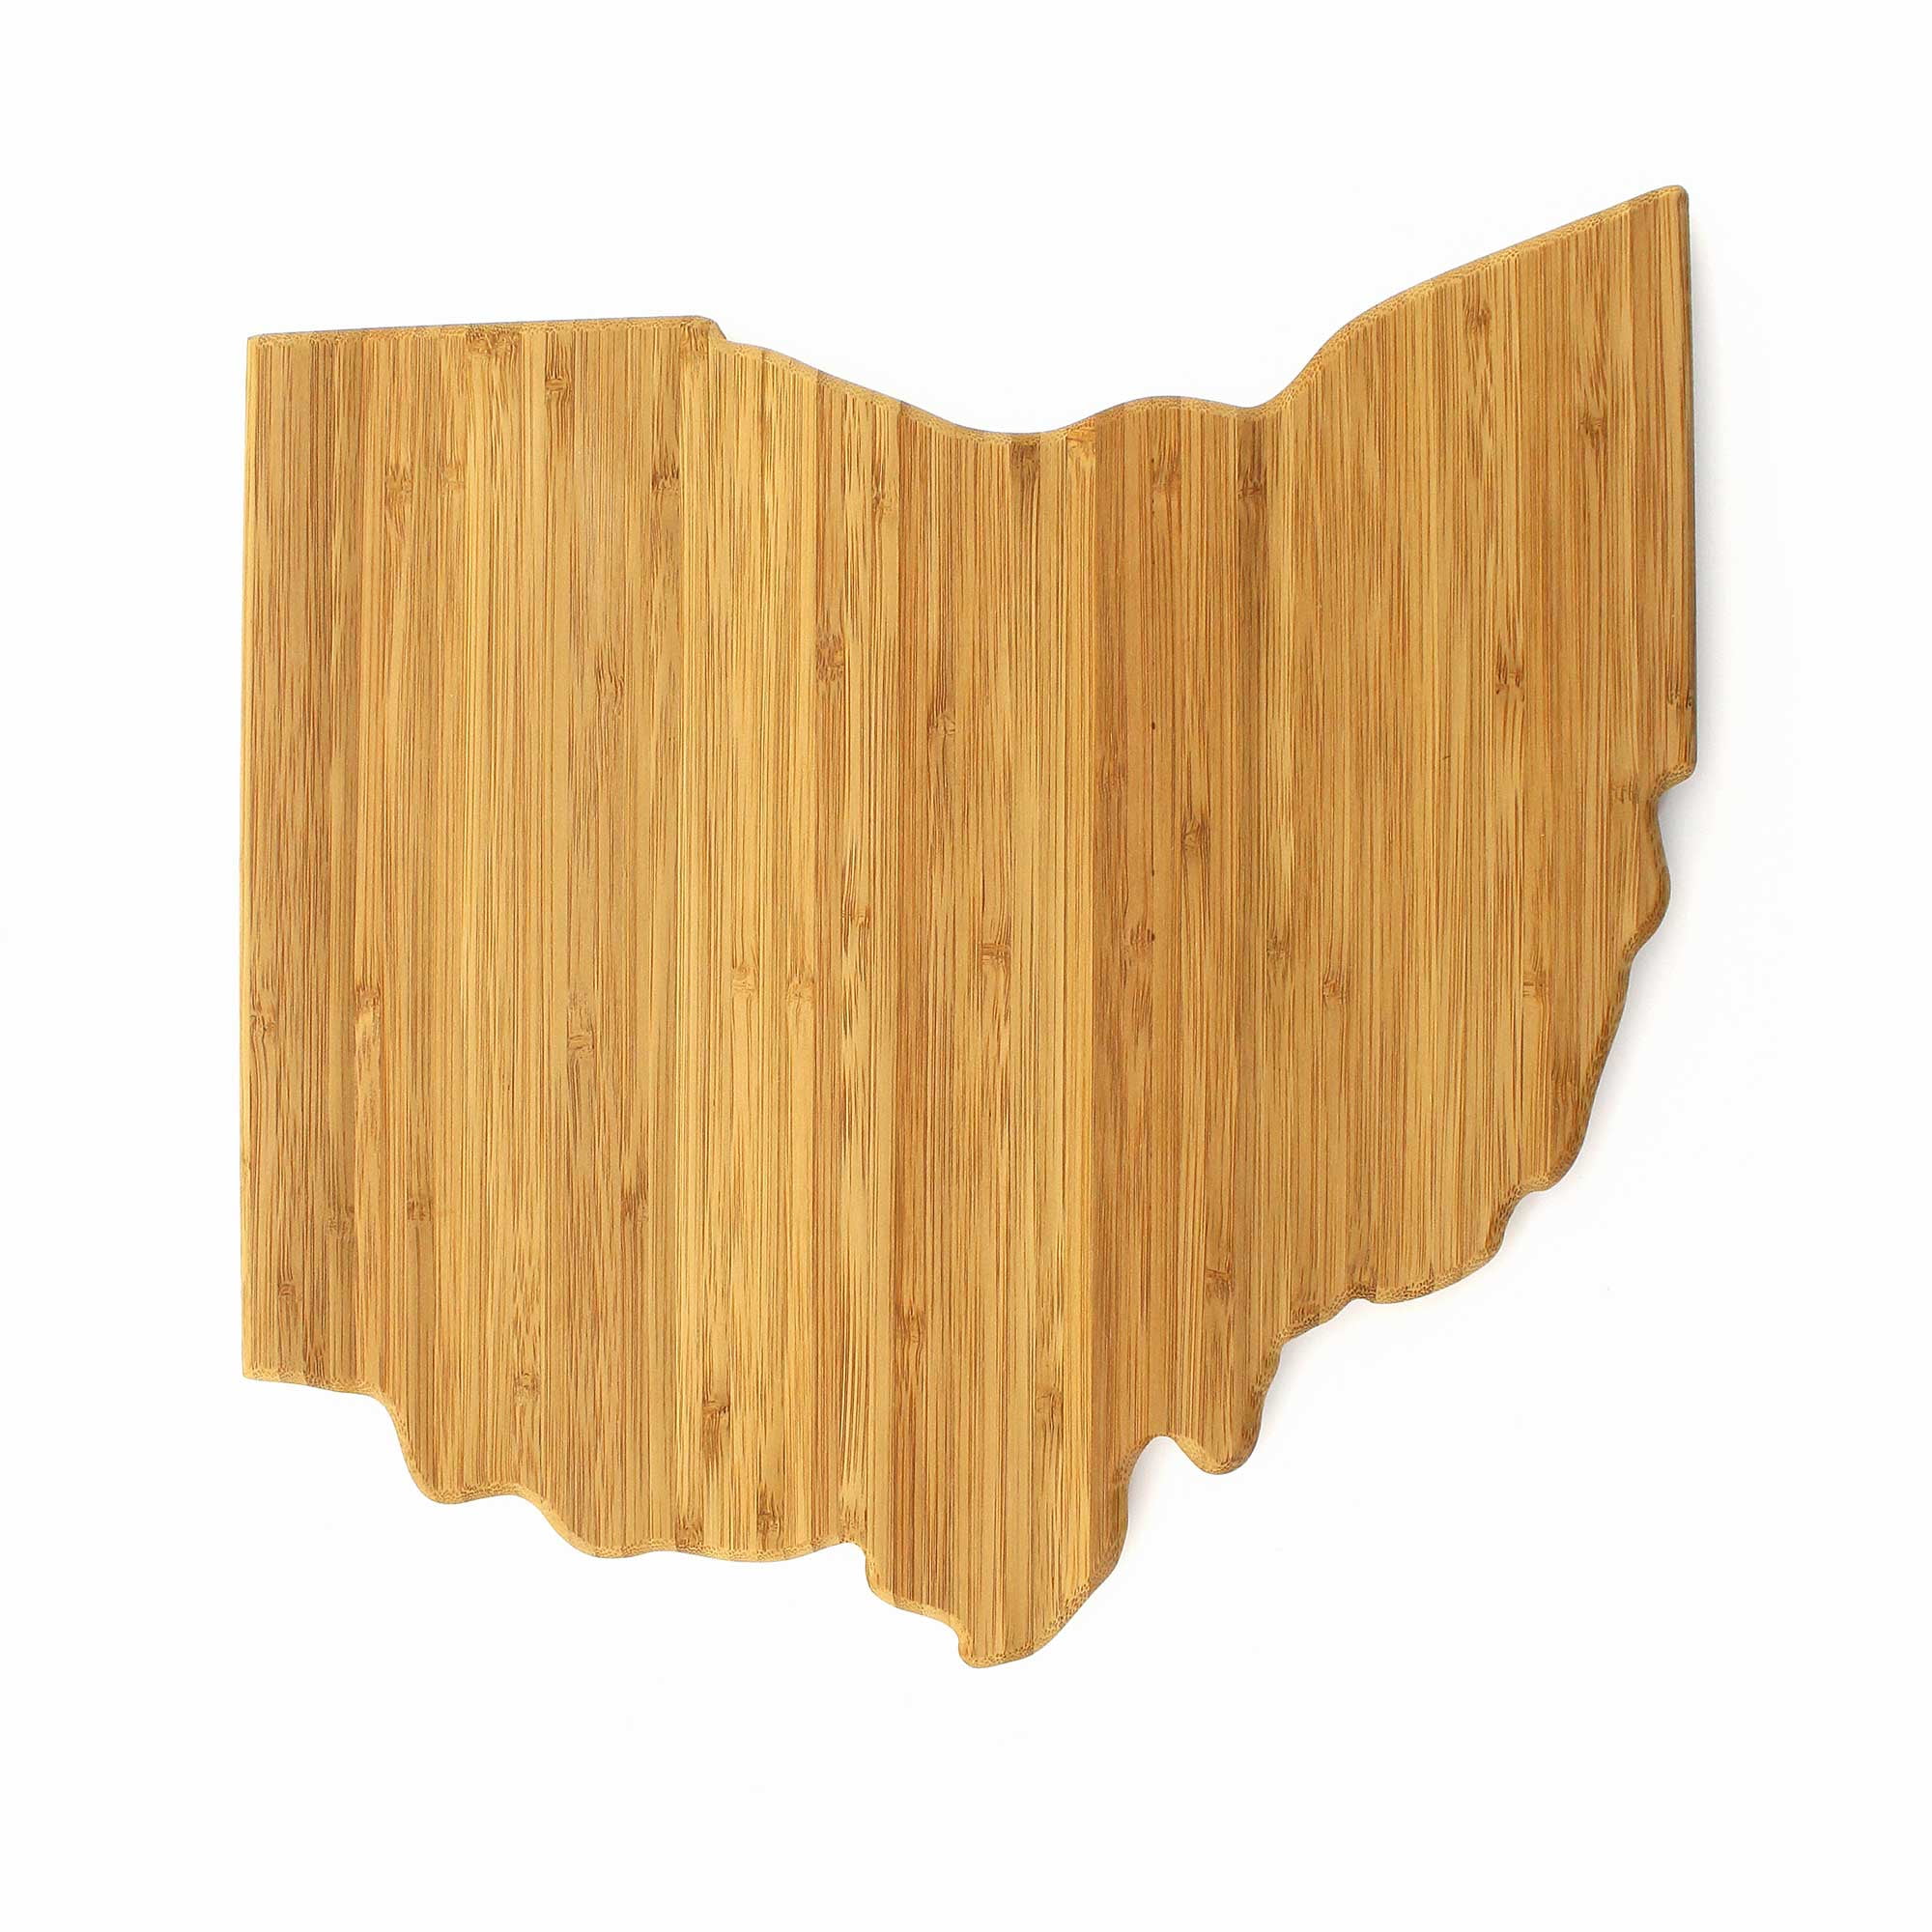 11.75 x 12 x .75-1 Piece 6955114980646a BambooMN Ohio Cut Out Bamboo Cutting Board